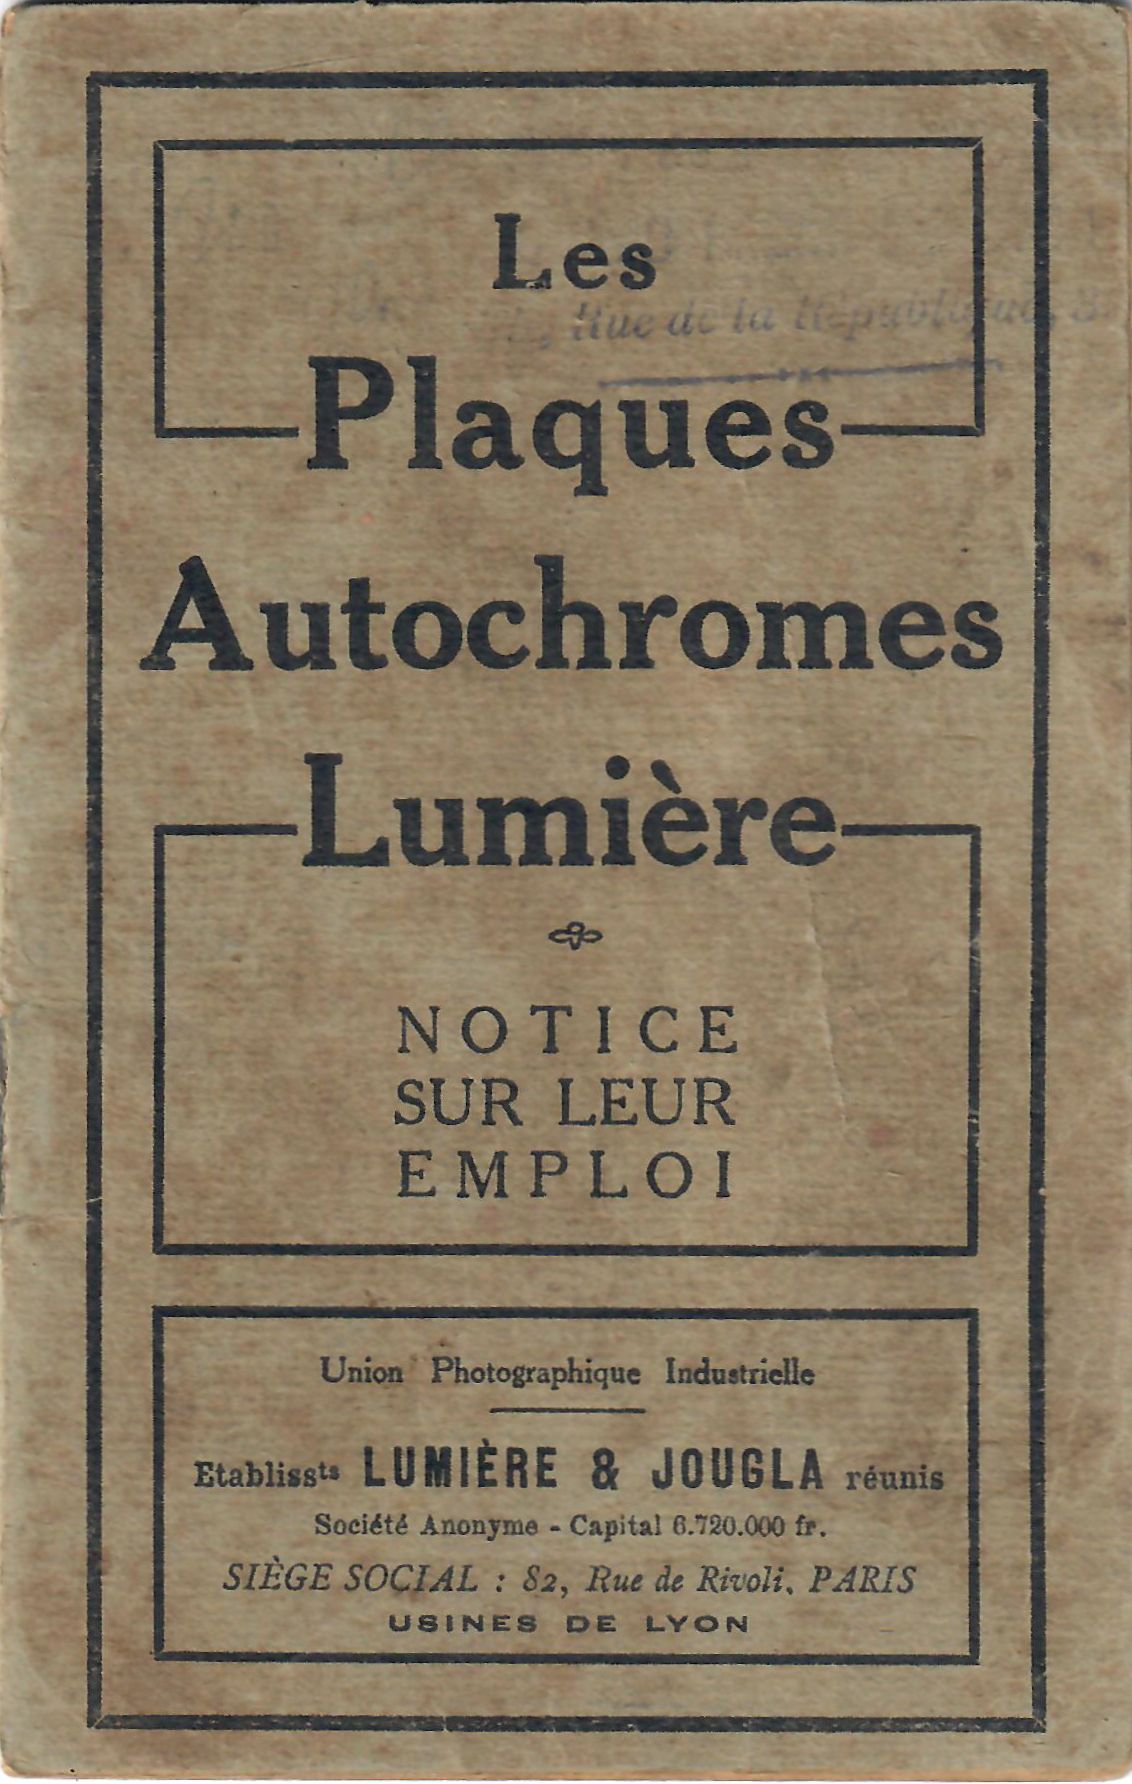 1923 - UPI - Notice Plaques Autochromes